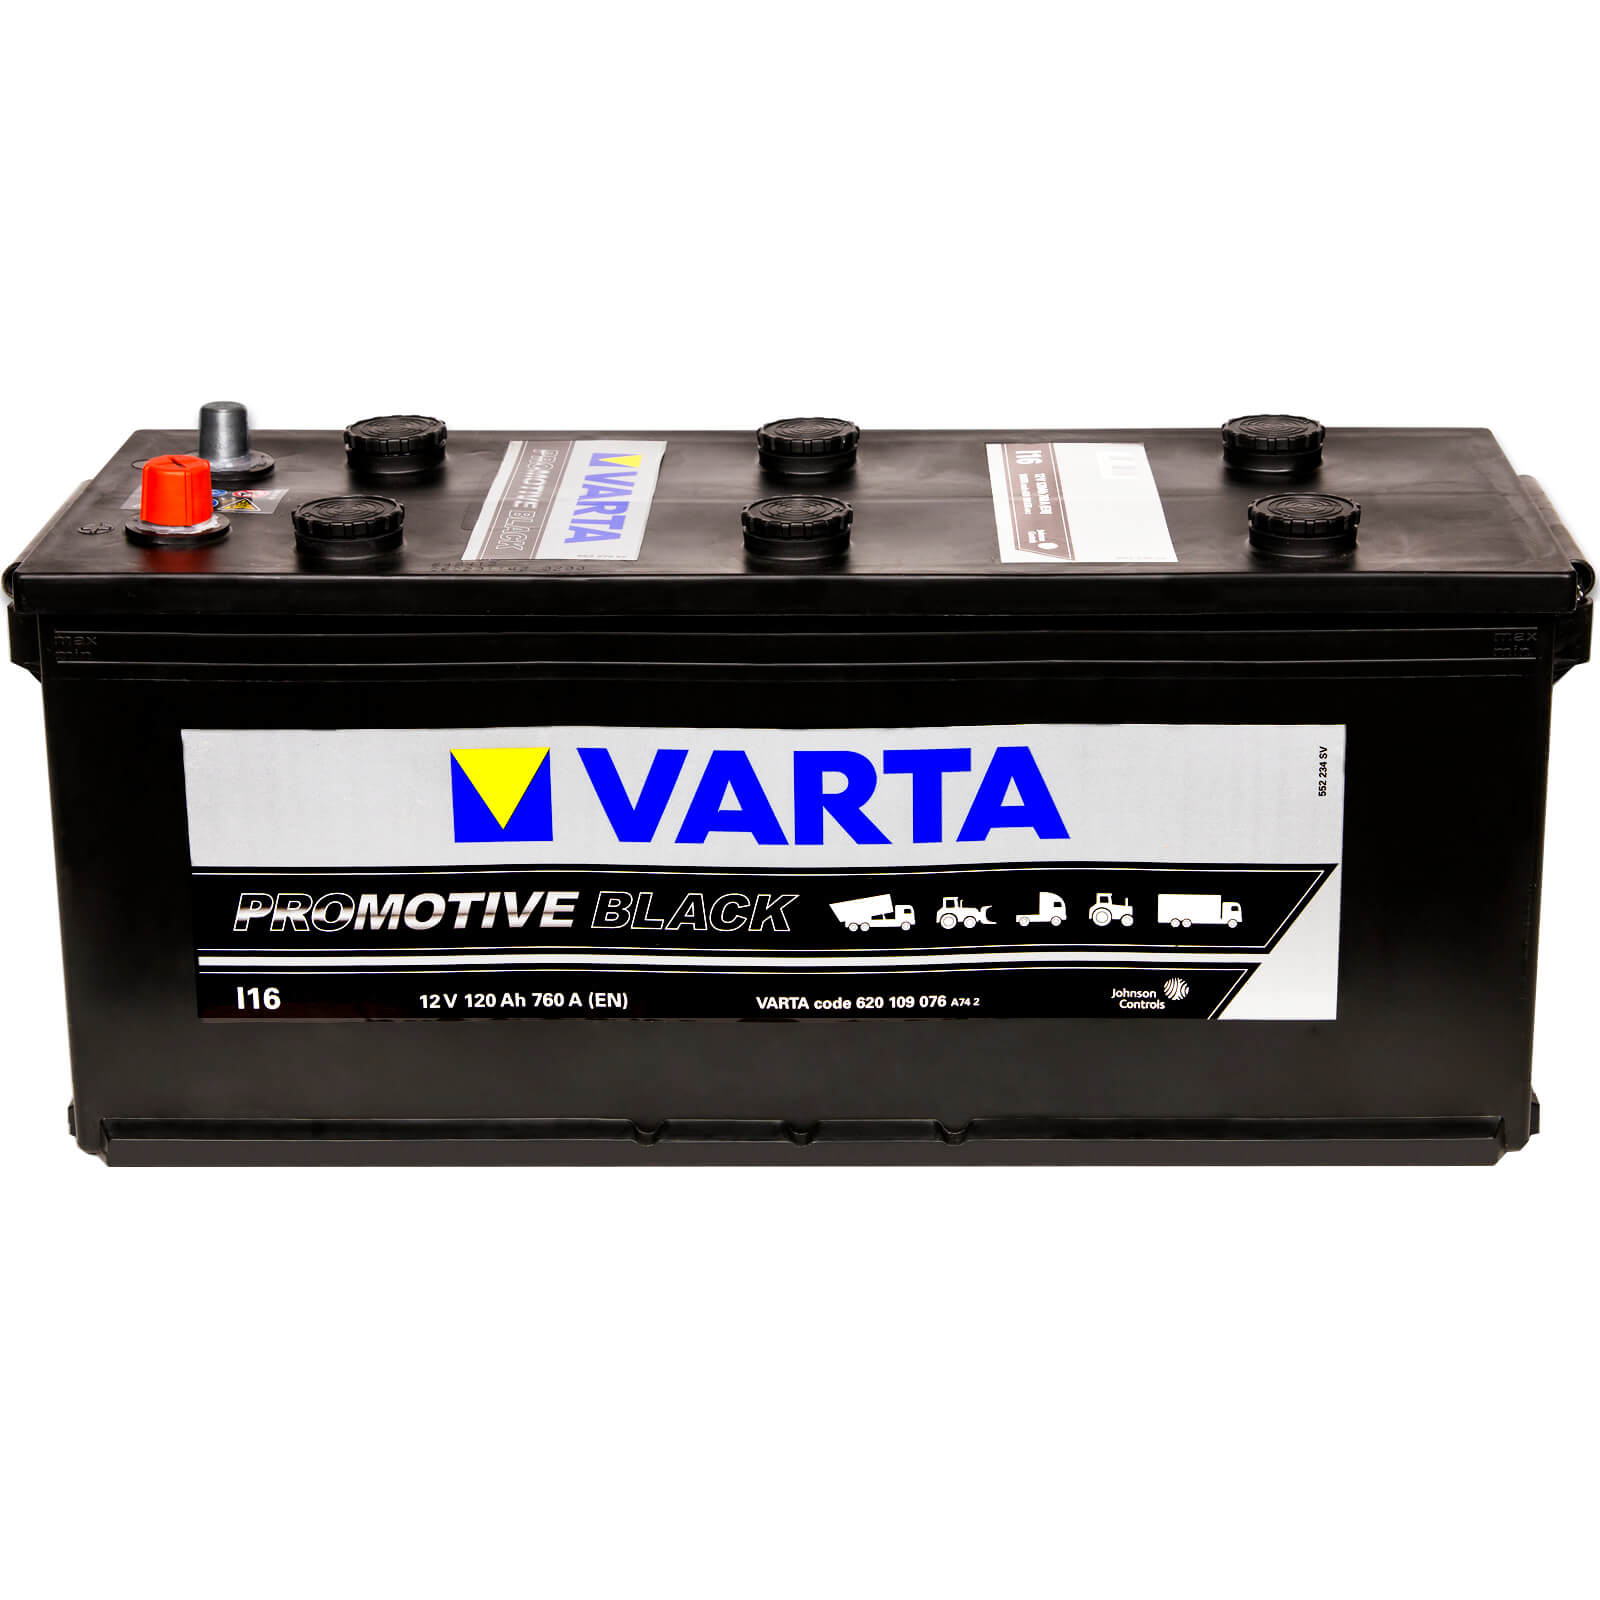 Rätikon Batterien AG - Powerflare Koffer blau Akku 6 LEDs 12V/220V